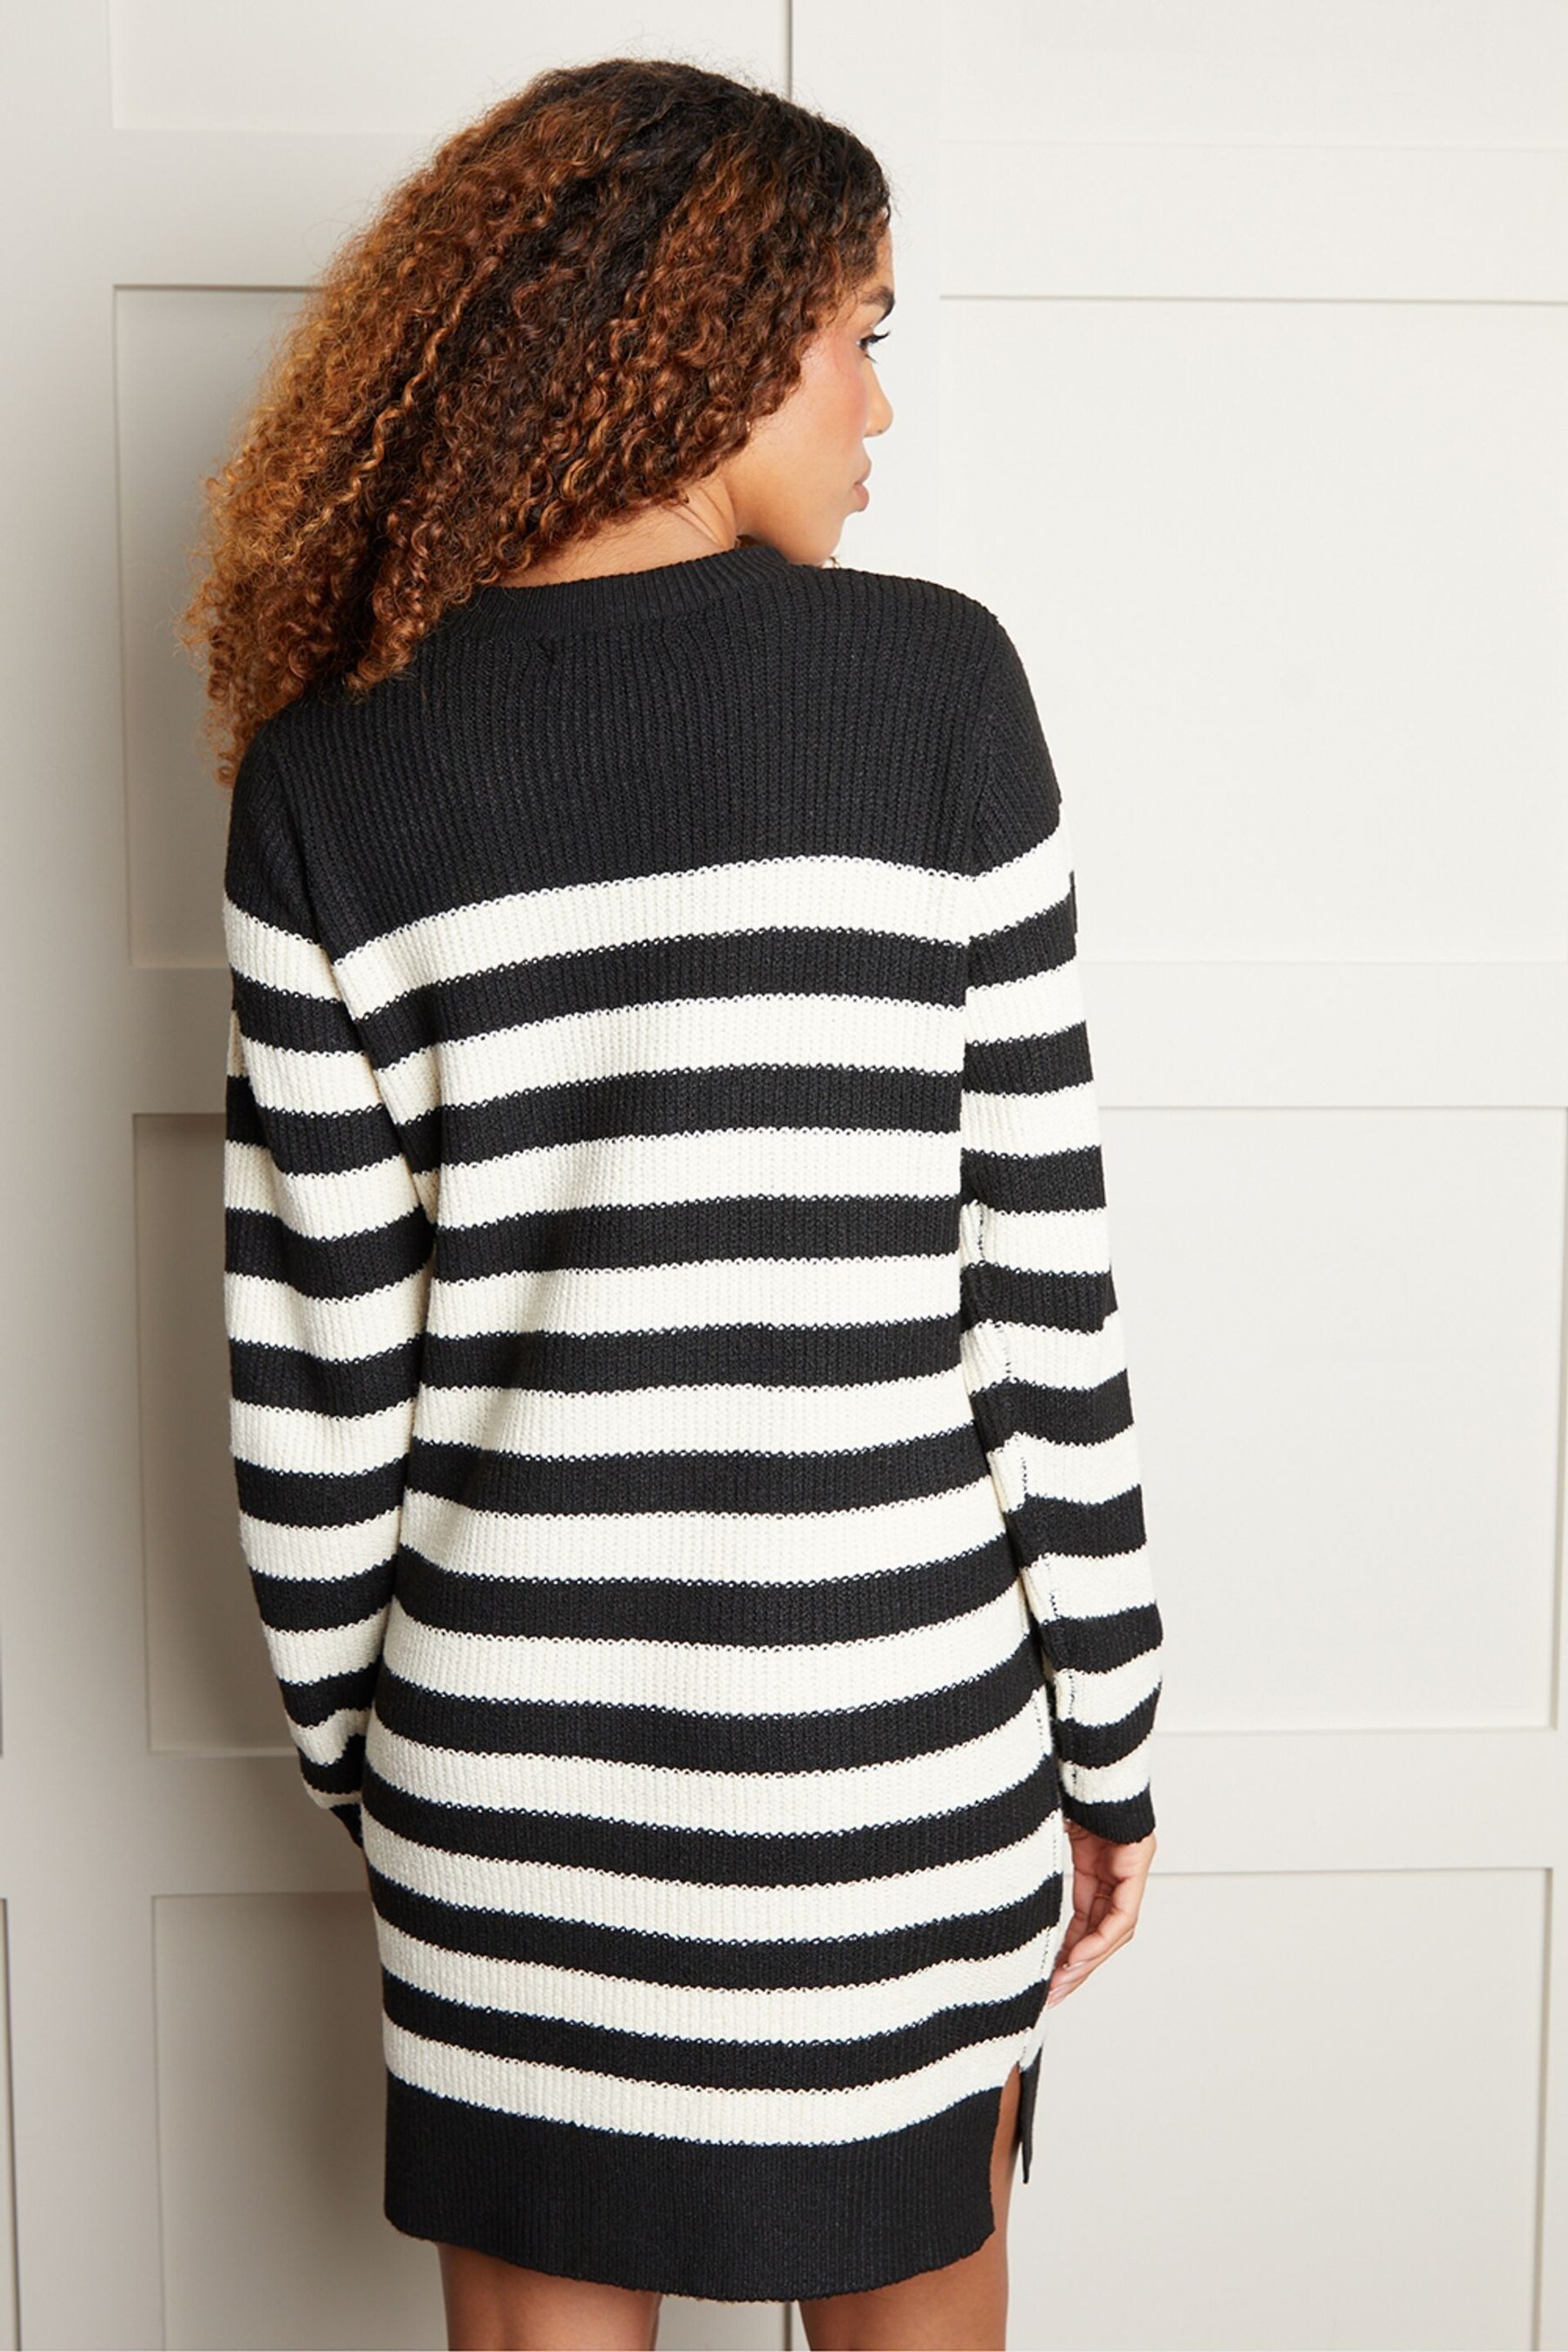 Threadbare Black Knitted Striped Dress - Image 2 of 4